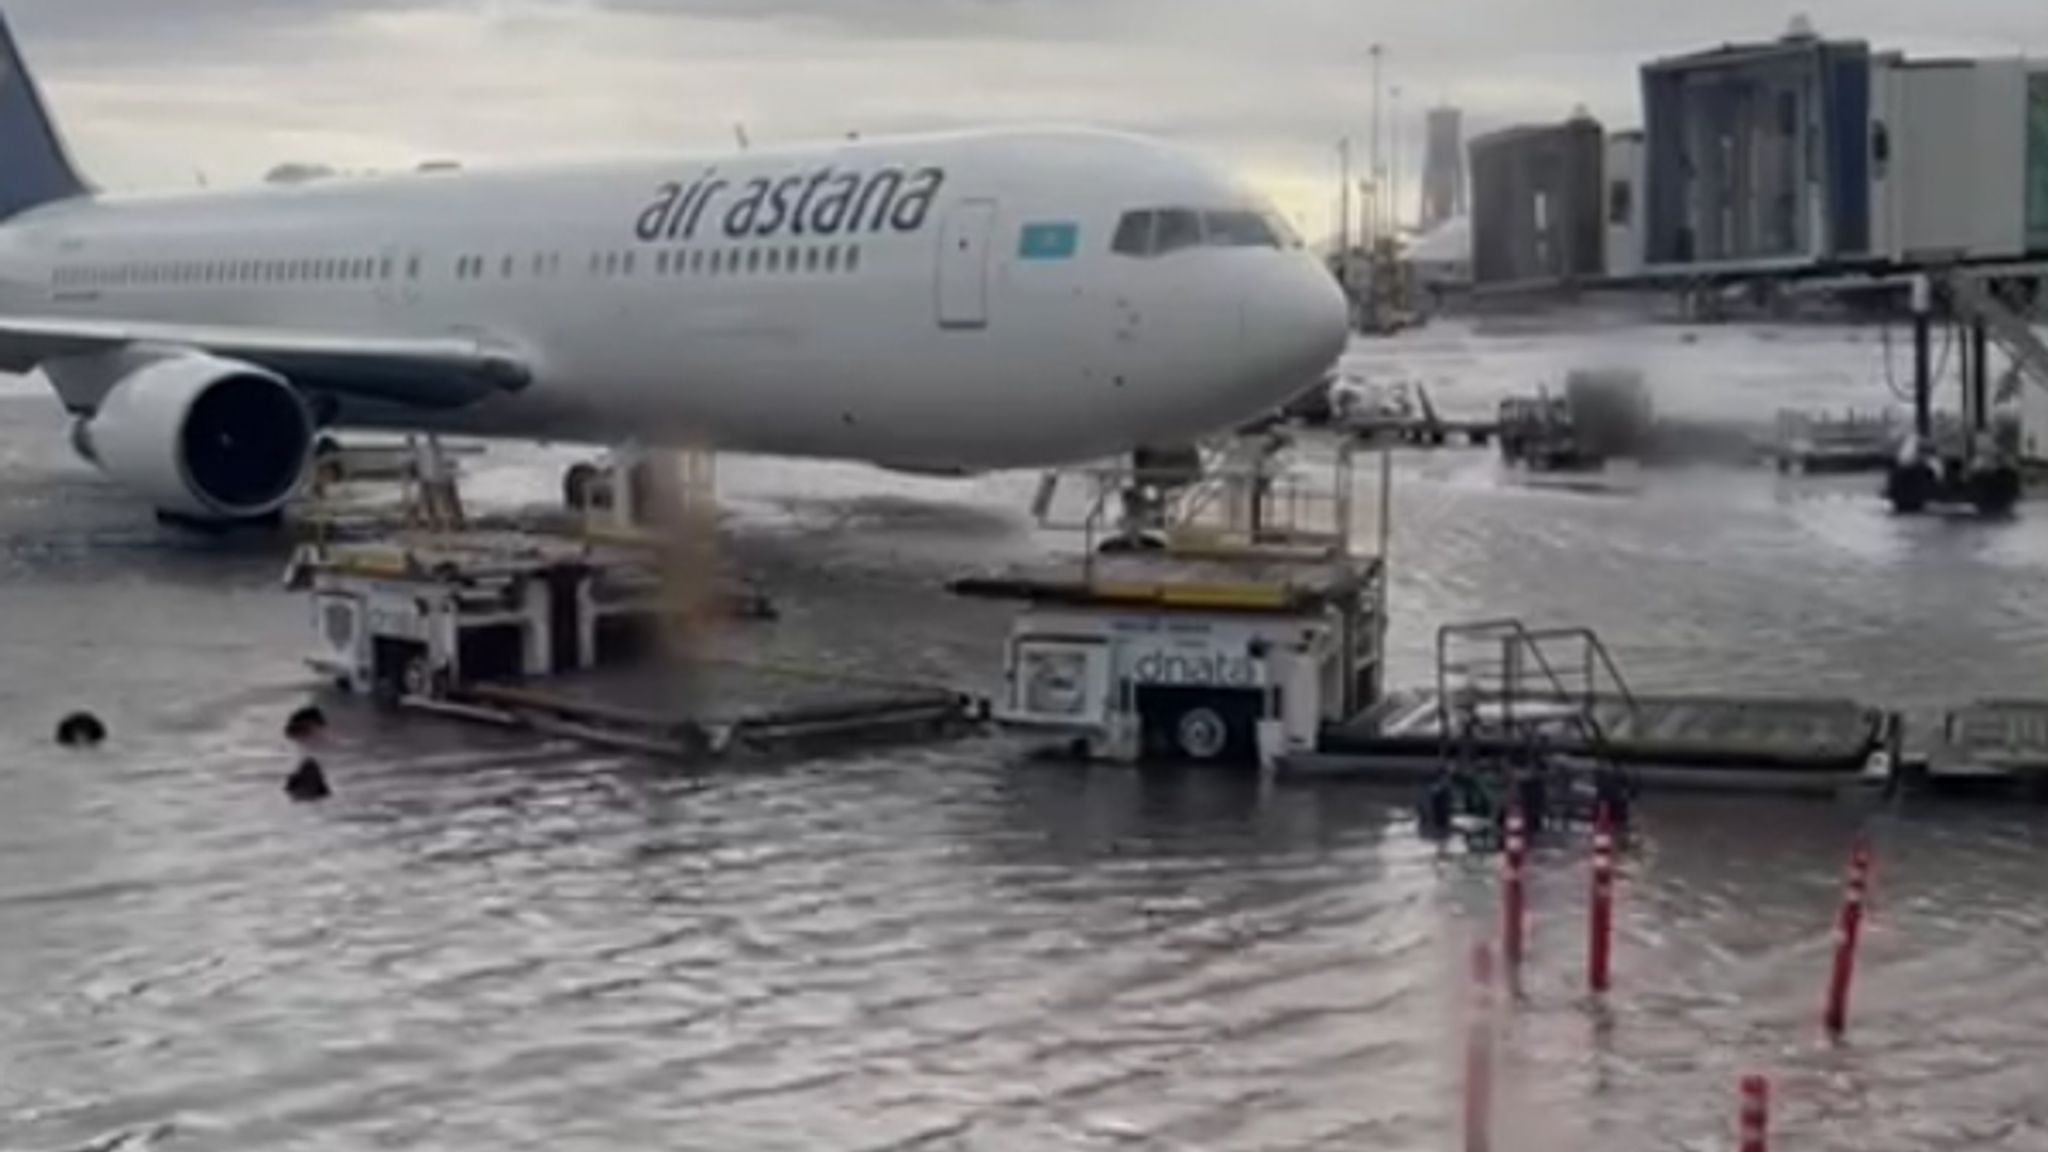 Flooding grounds planes at Dubai Airport